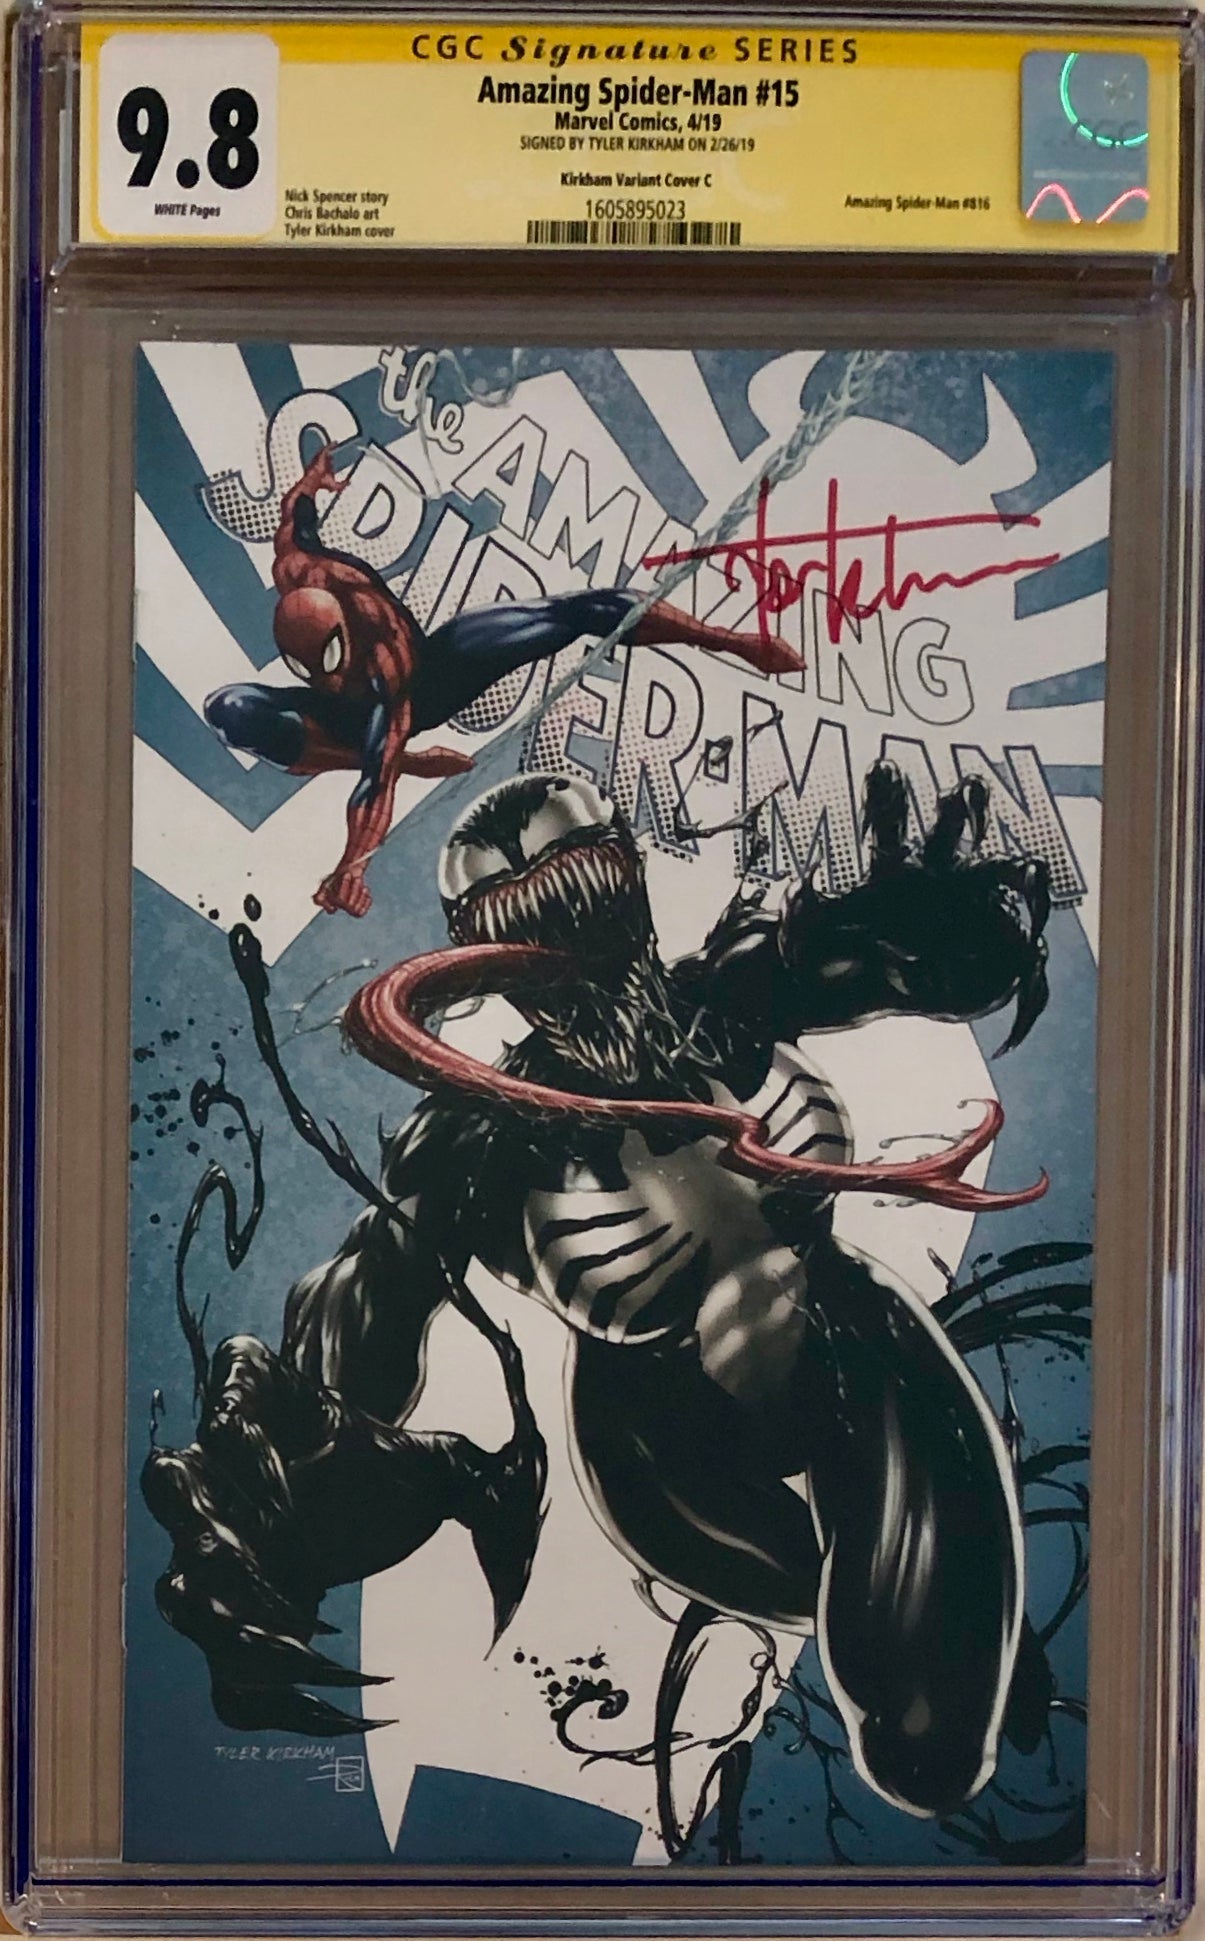 Amazing Spider-Man #15 Tyler Kirkham Edition C "She-Venom" Exclusive CGC 9.8 SS